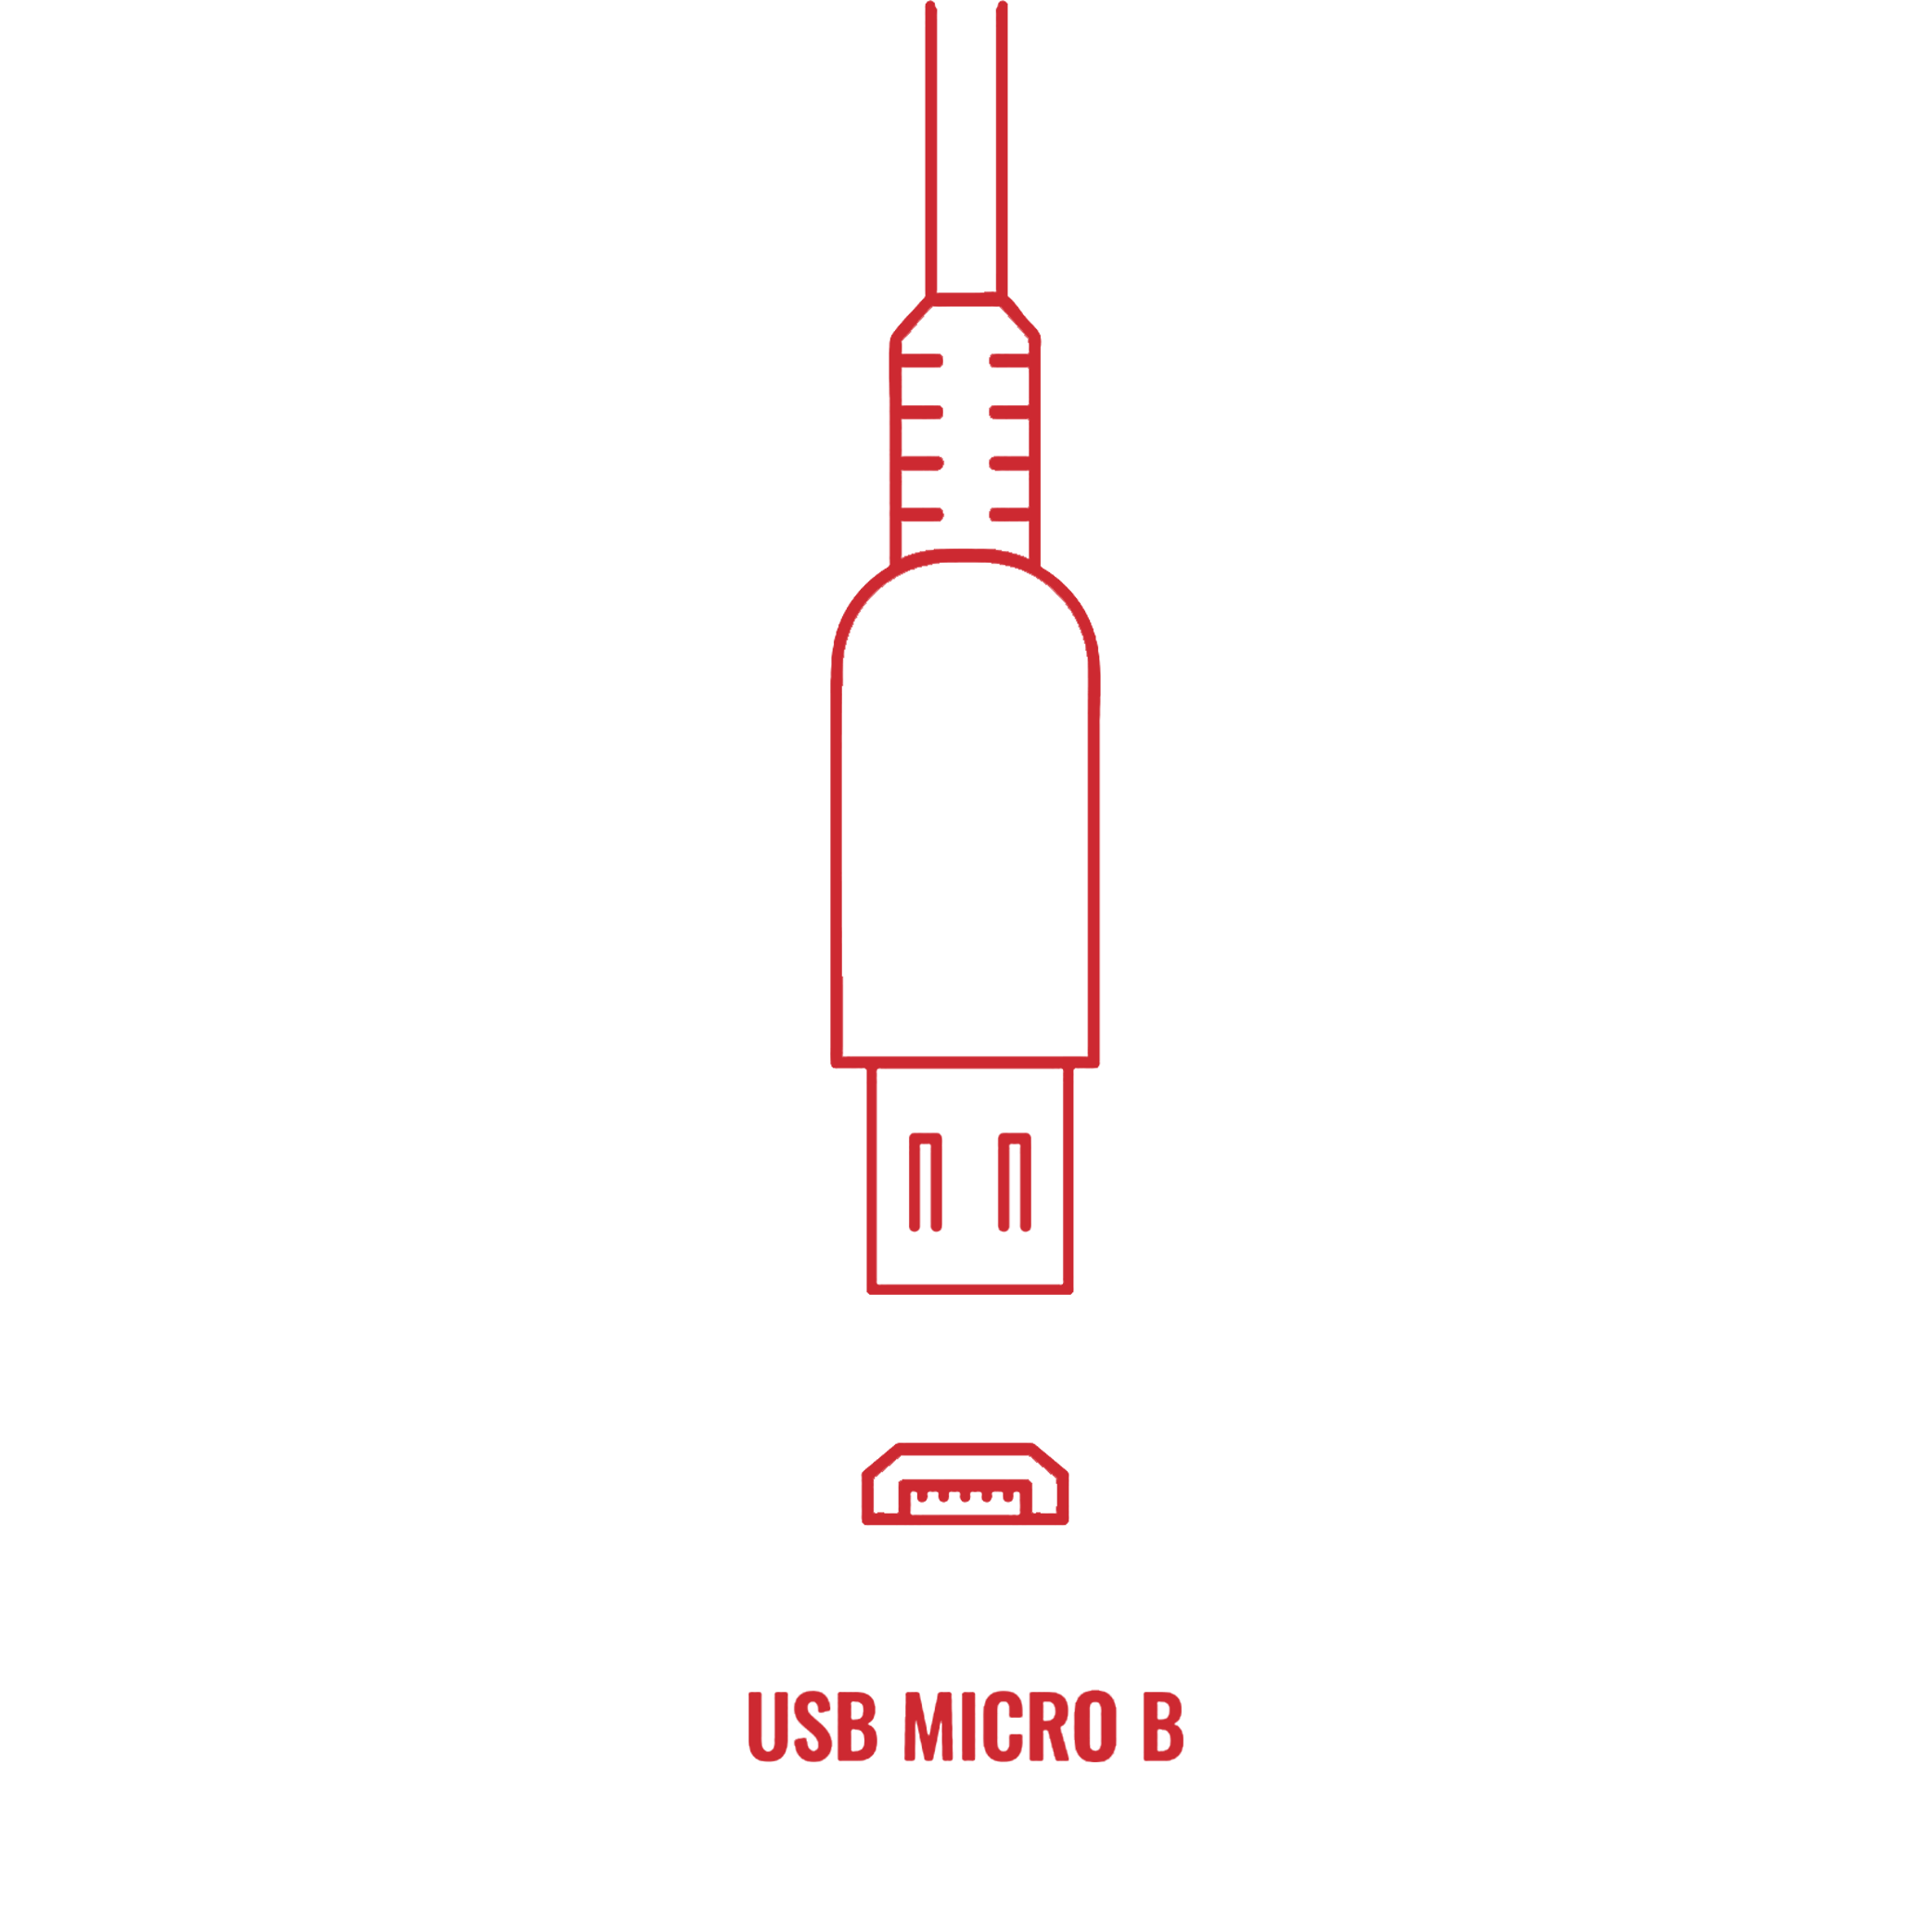 Micro USB-B device